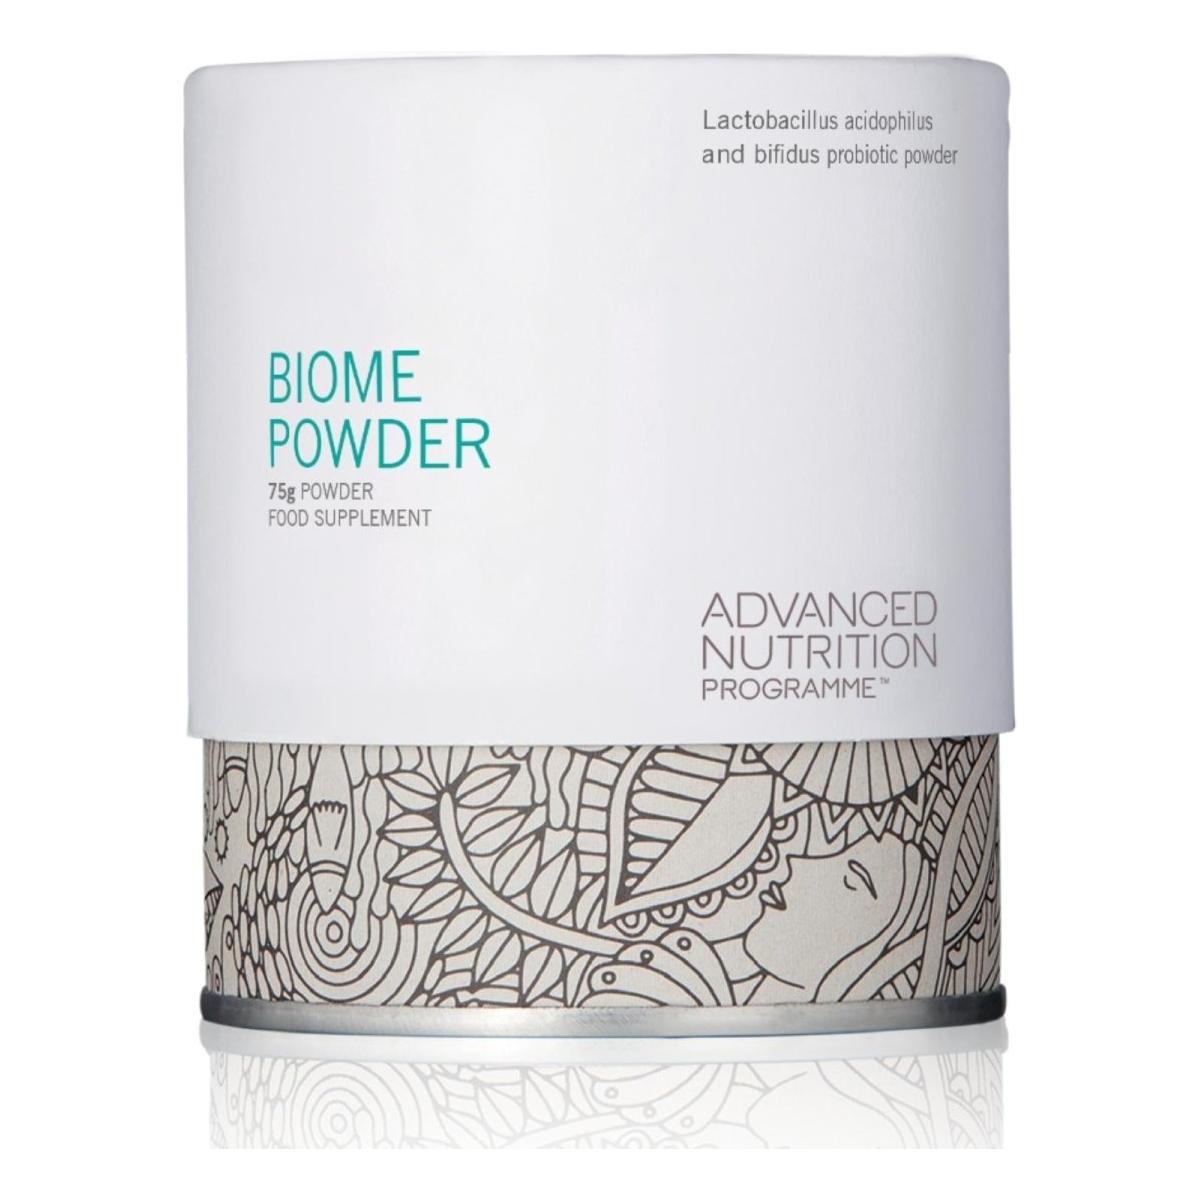 Advanced Nutrition Programme | Biome Powder | 75g powder - DG International Ventures Limited